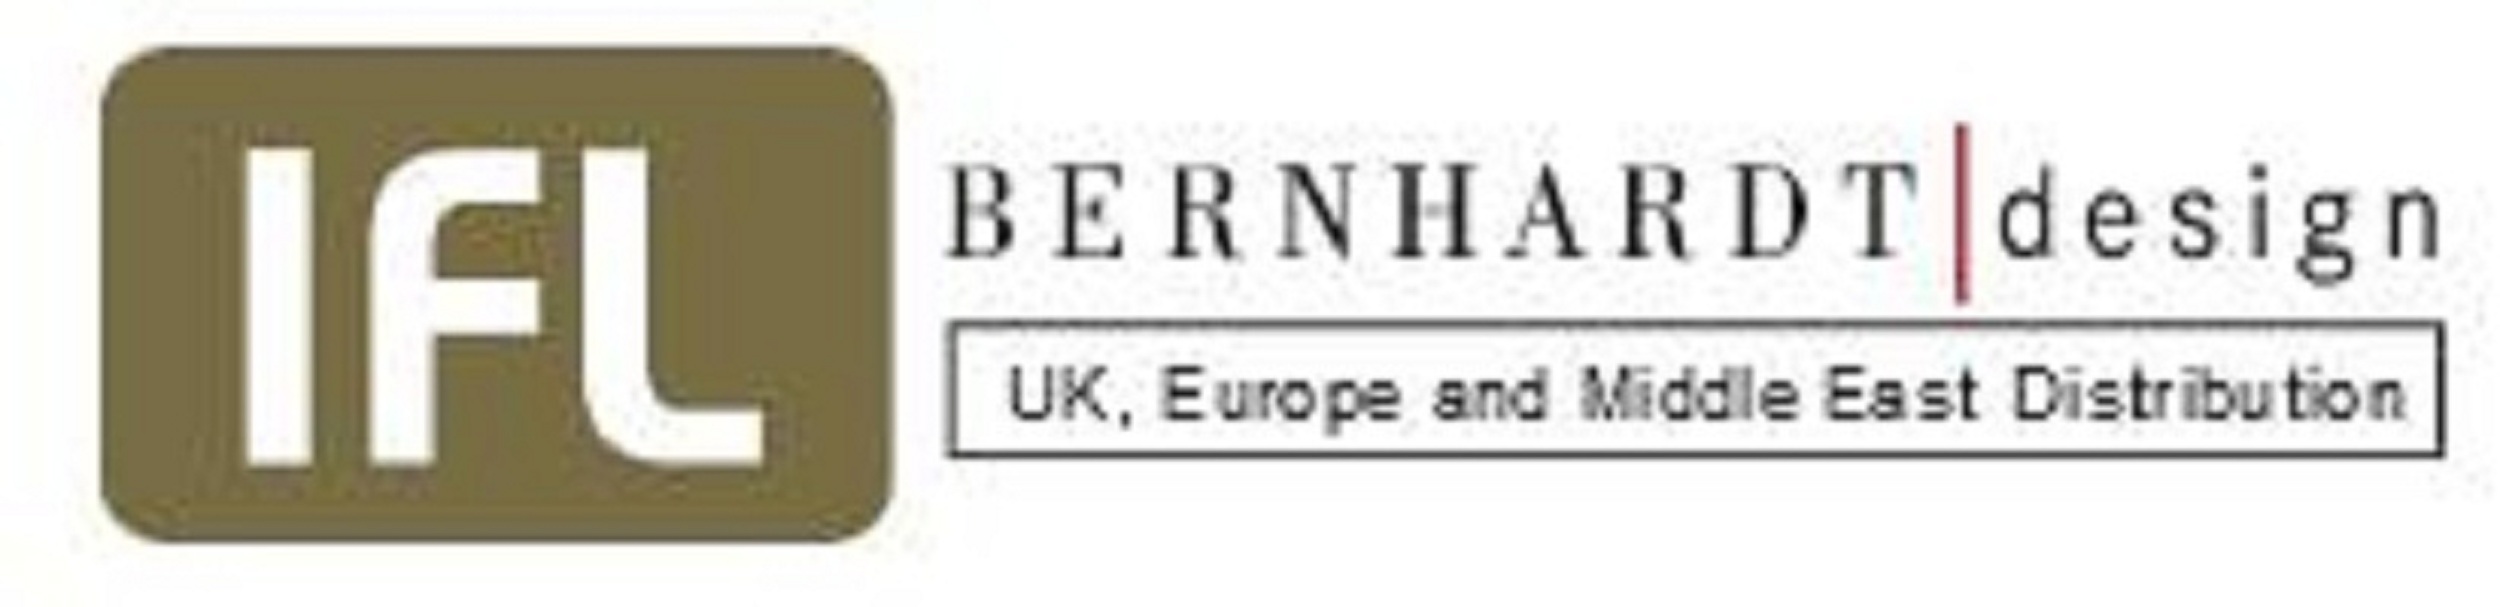 Bernhardt Furniture - Bernhardt Design in the Middle East, UK and Europe